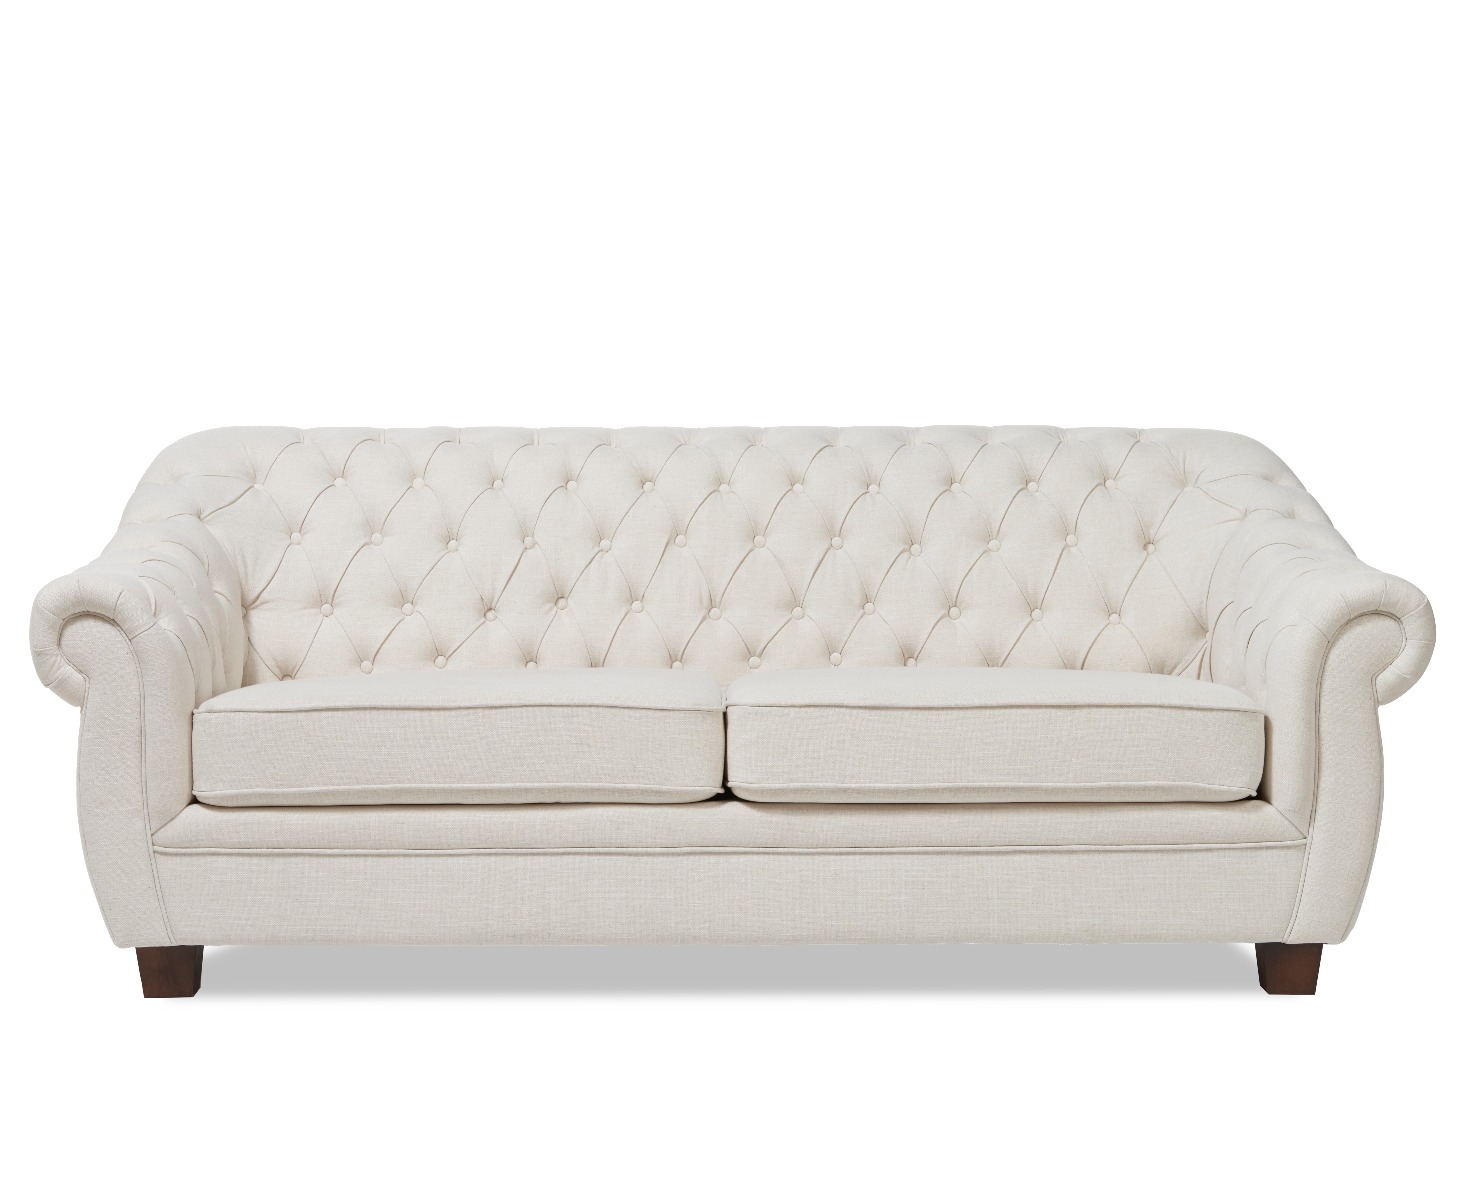 Photo 1 of Eva chesterfield ivory linen fabric three-seater sofa